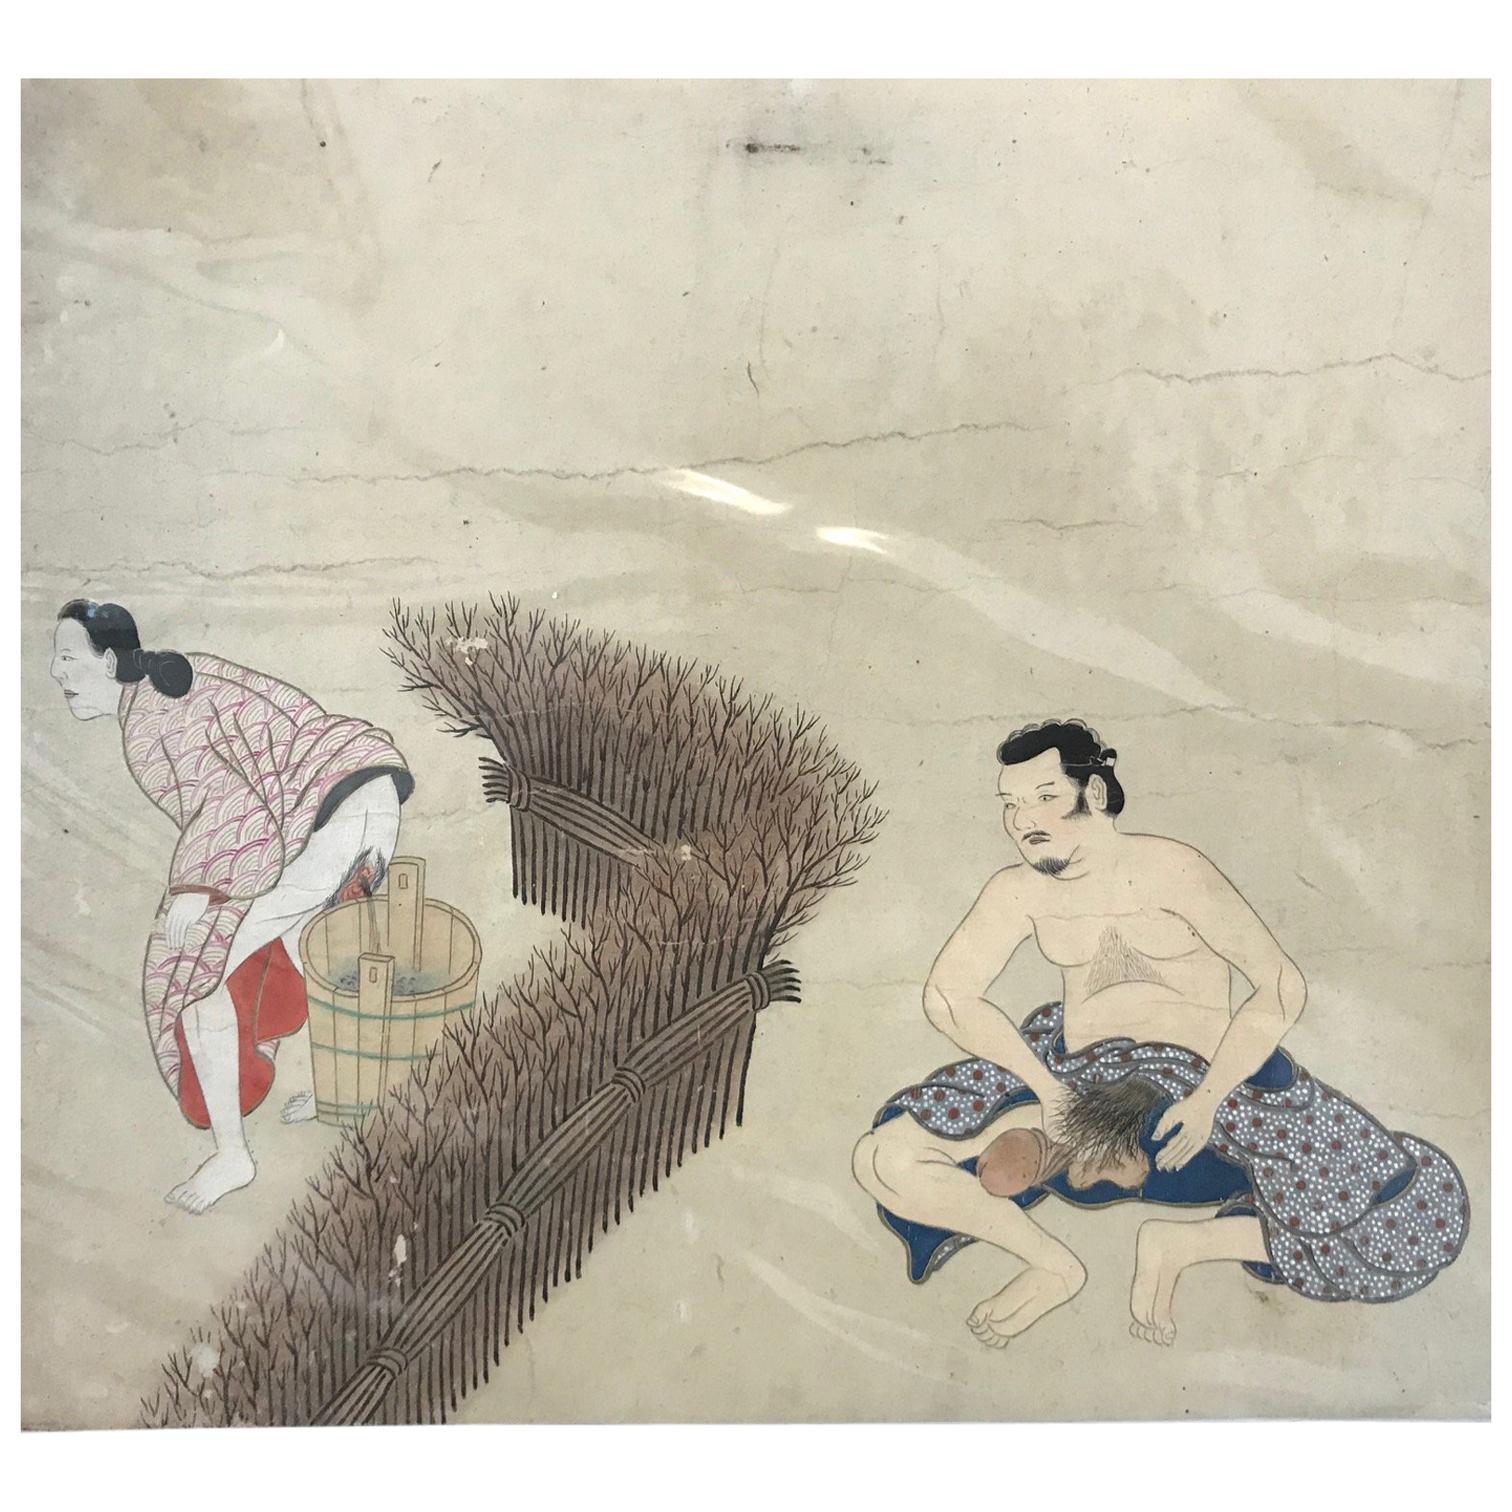 Japanese Fine and Early "Shunga" Tosa School Erotic Humor Painting, circa 1700